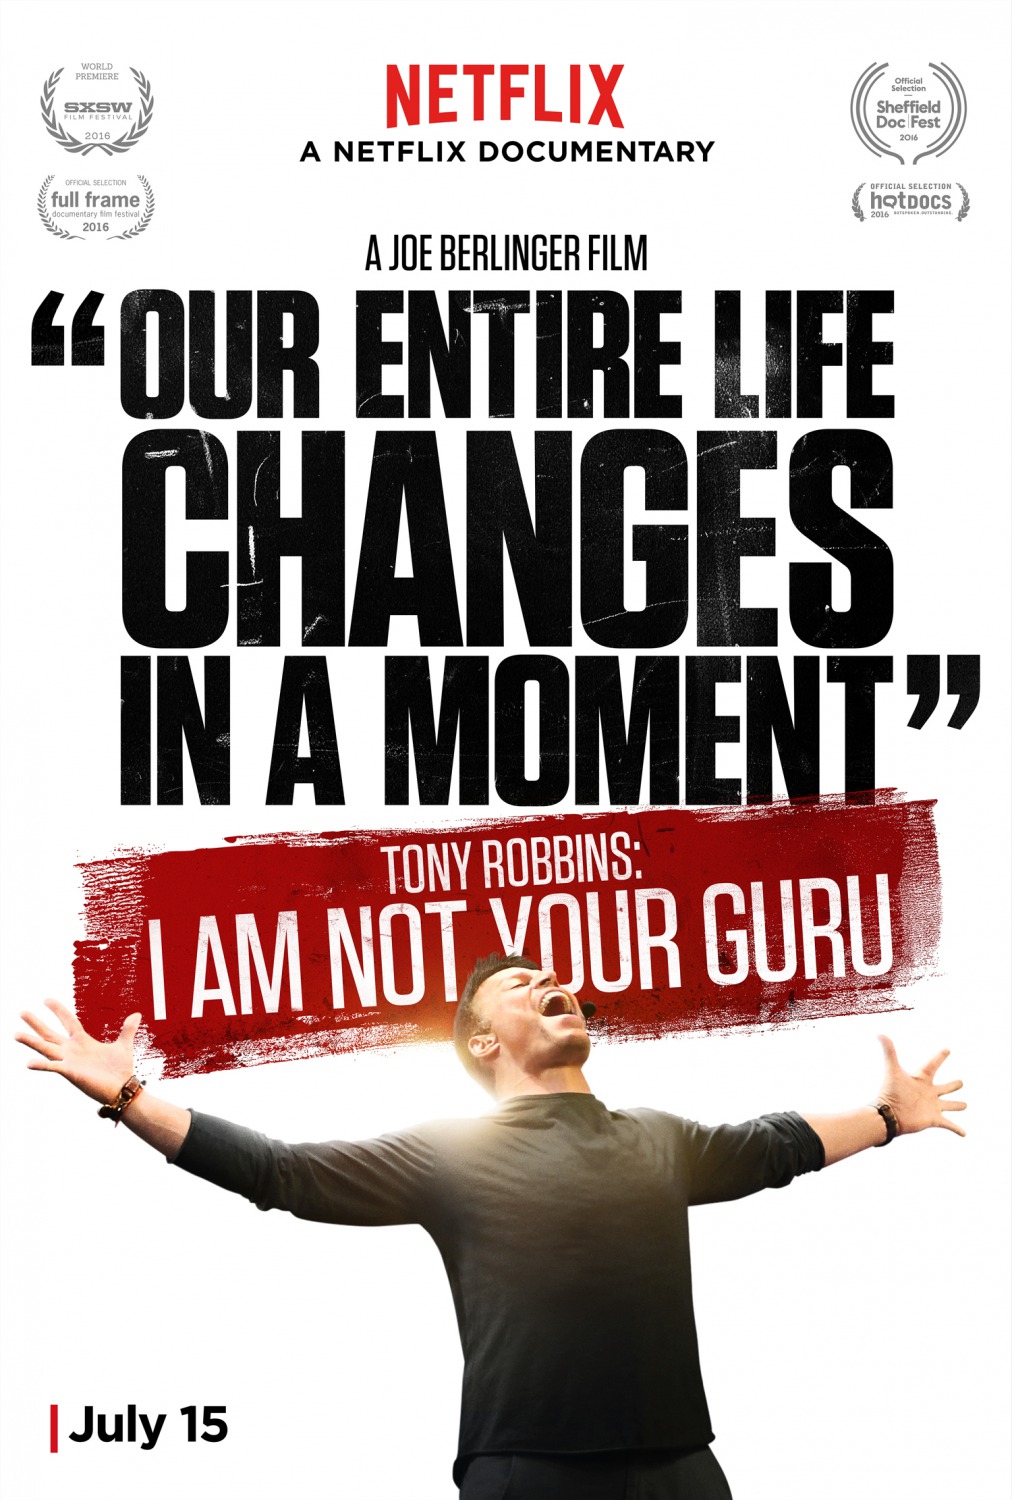 Tony Robbins I Am Not Your Guru